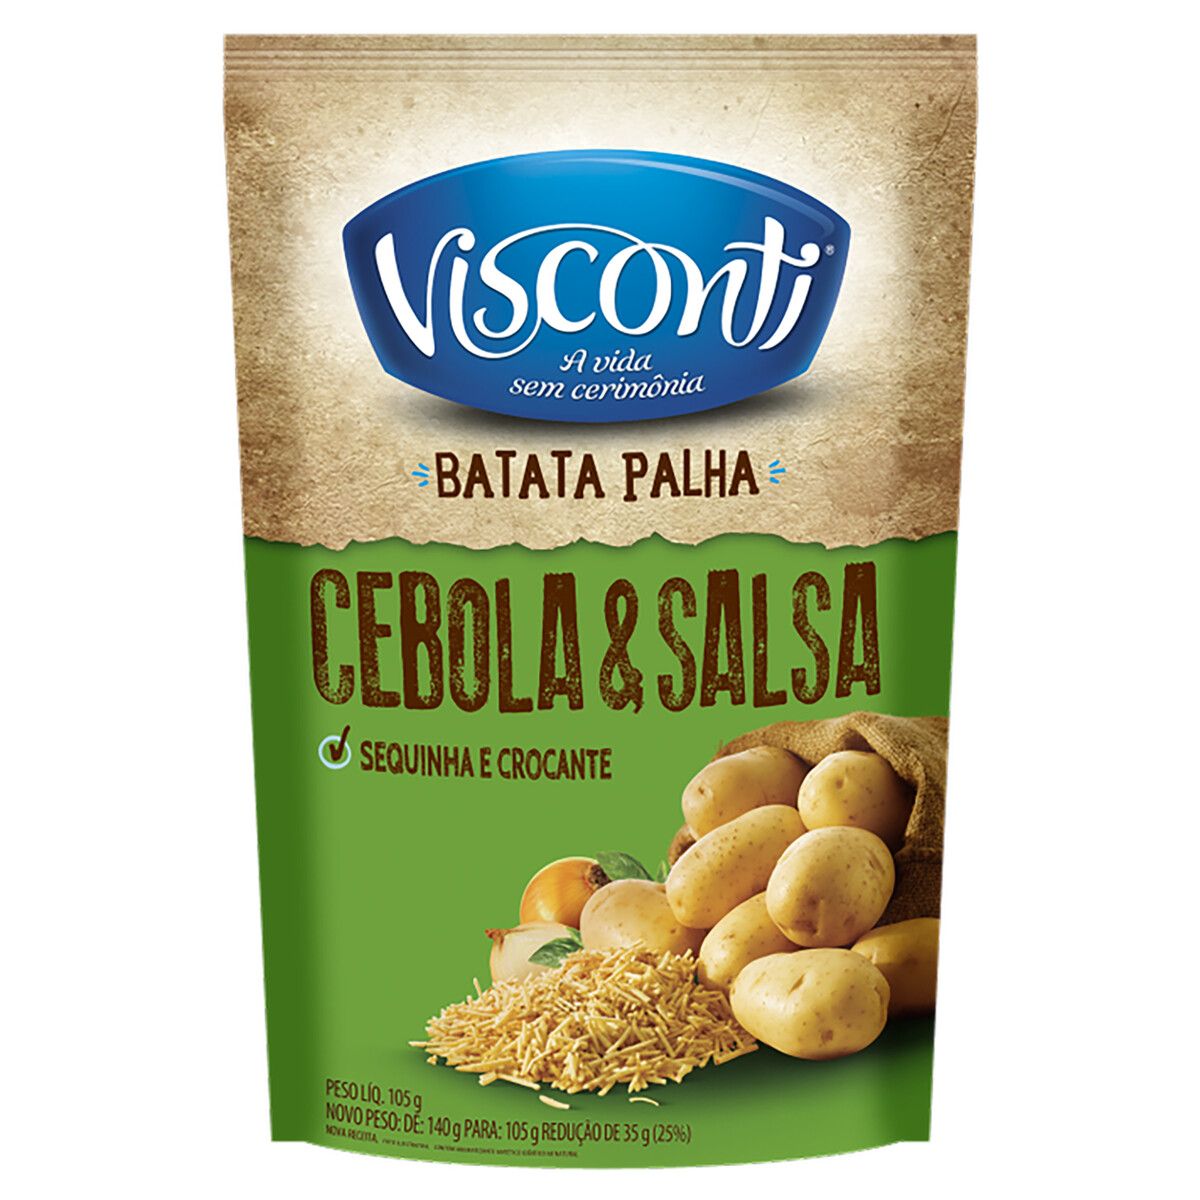 Batata Palha Visconti Cebola e Salsa 105g